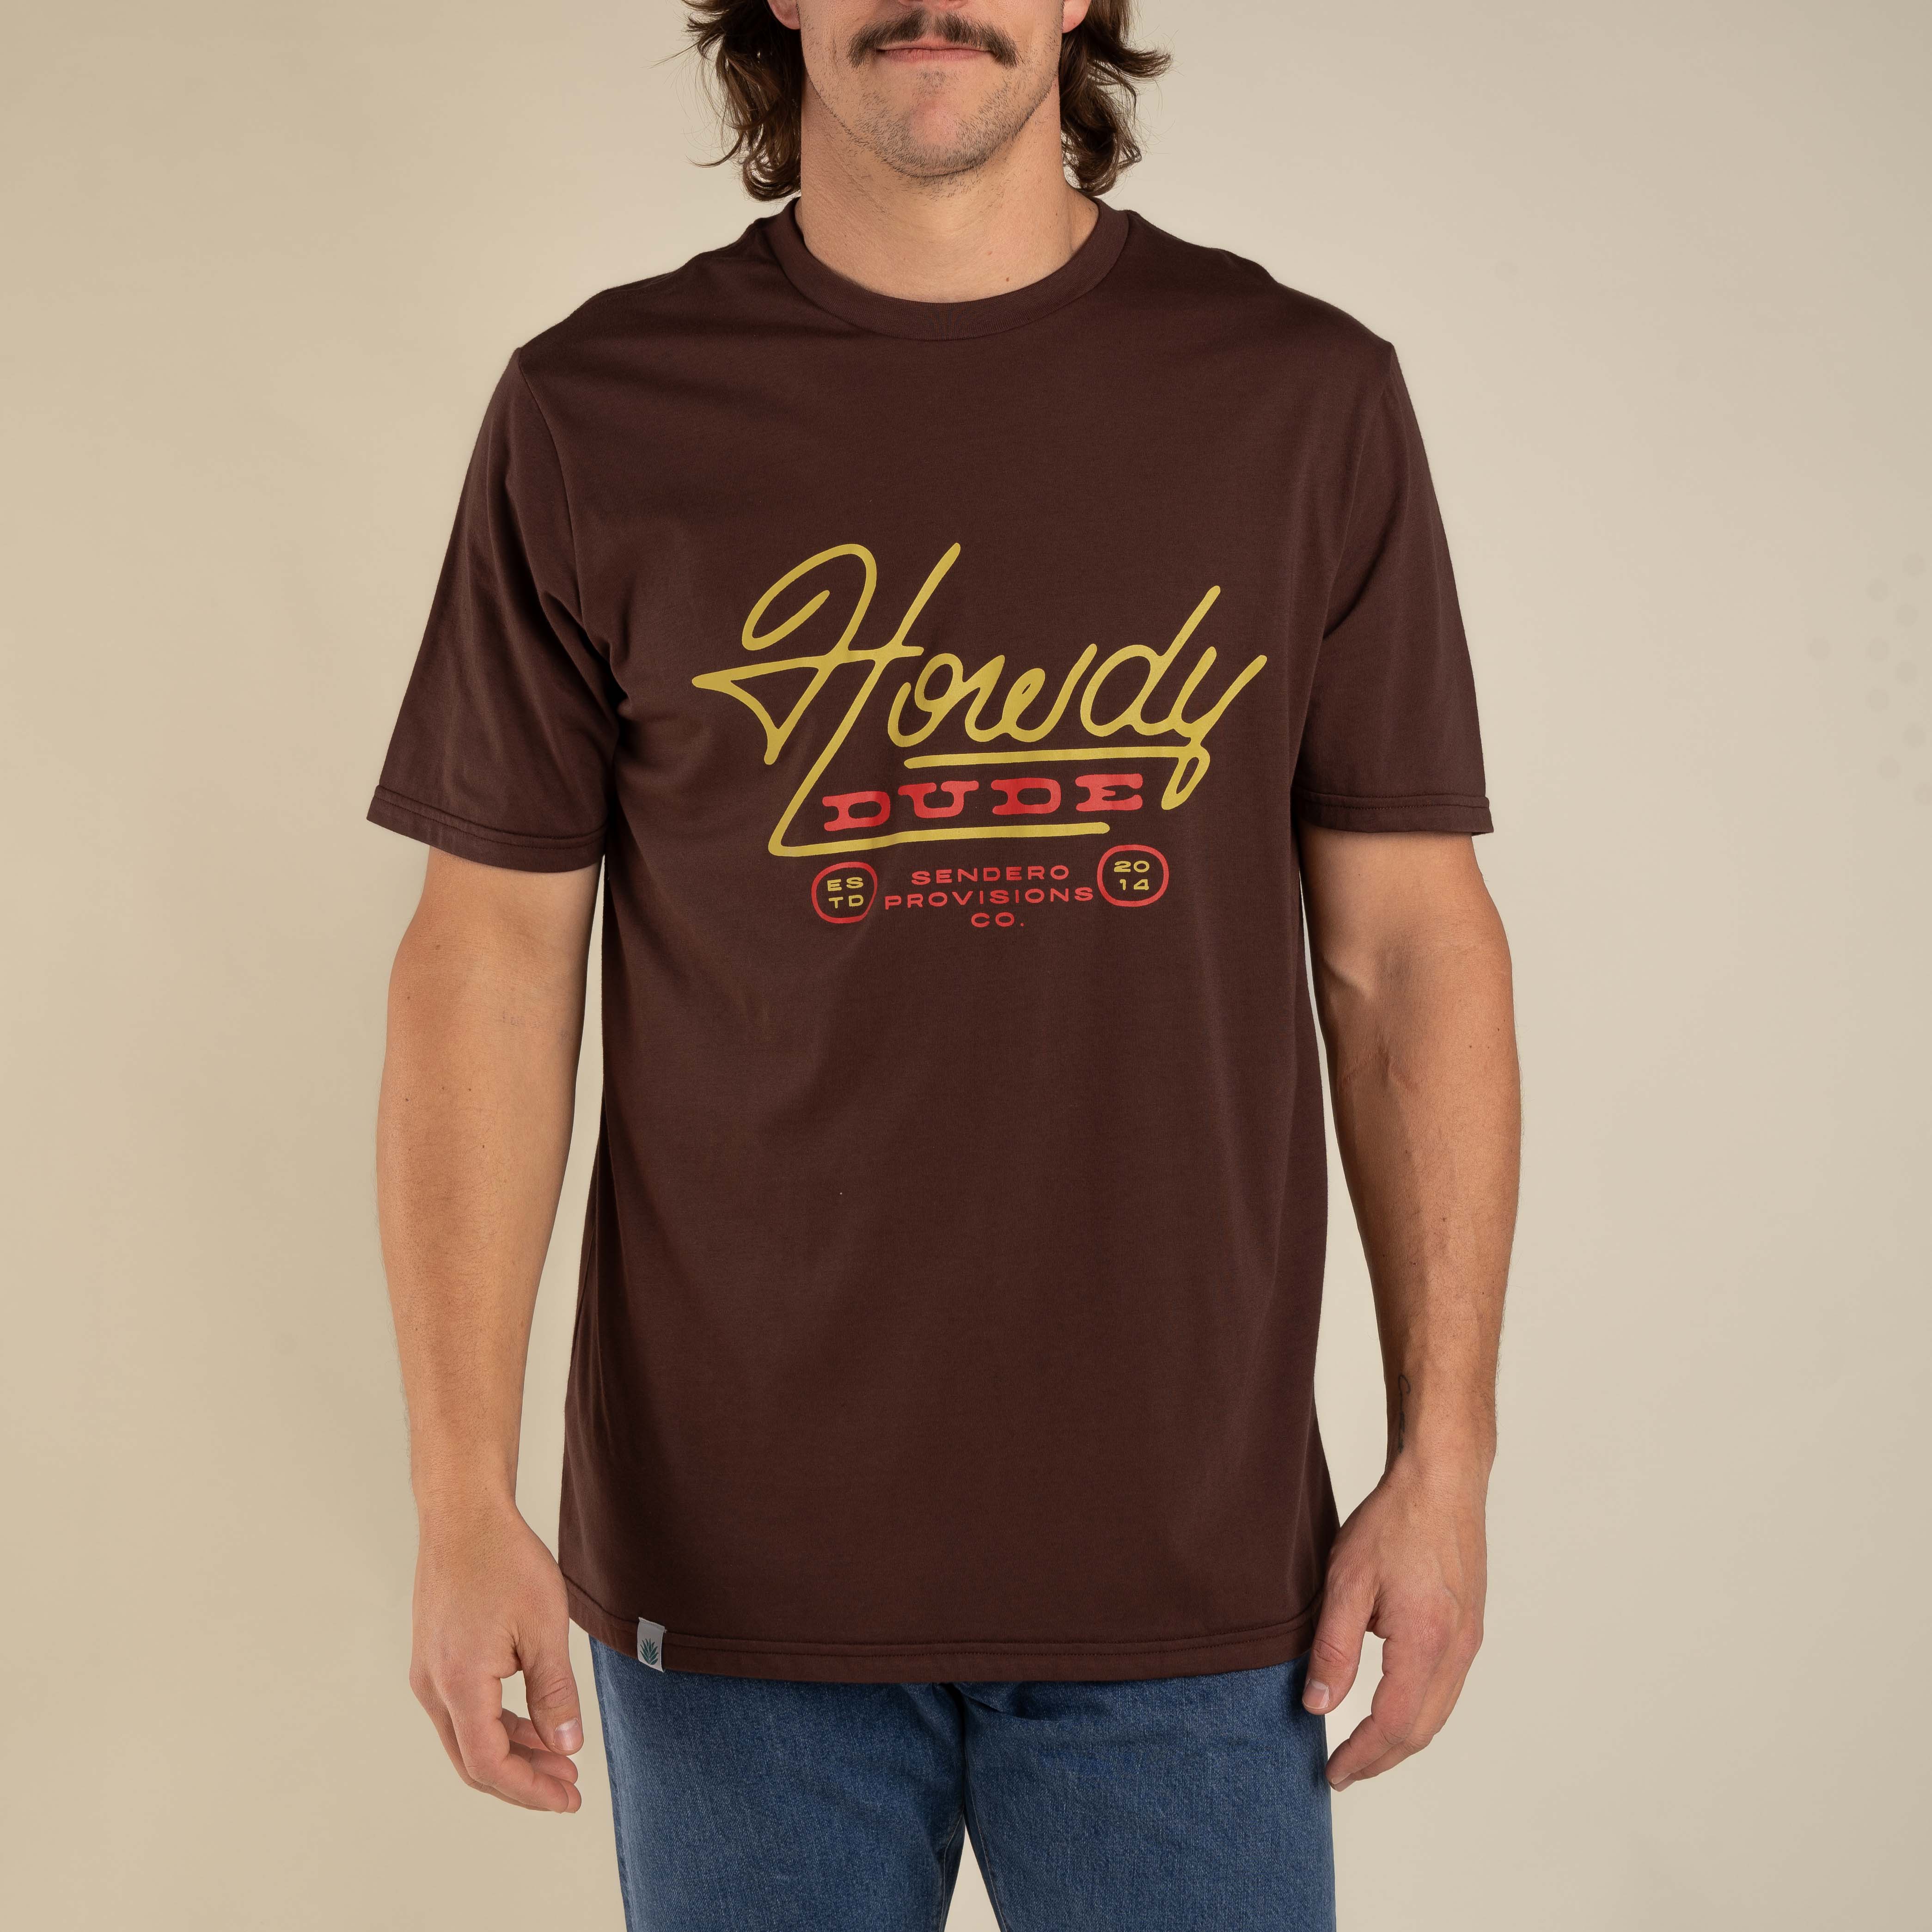 Howdy Dude T-Shirt